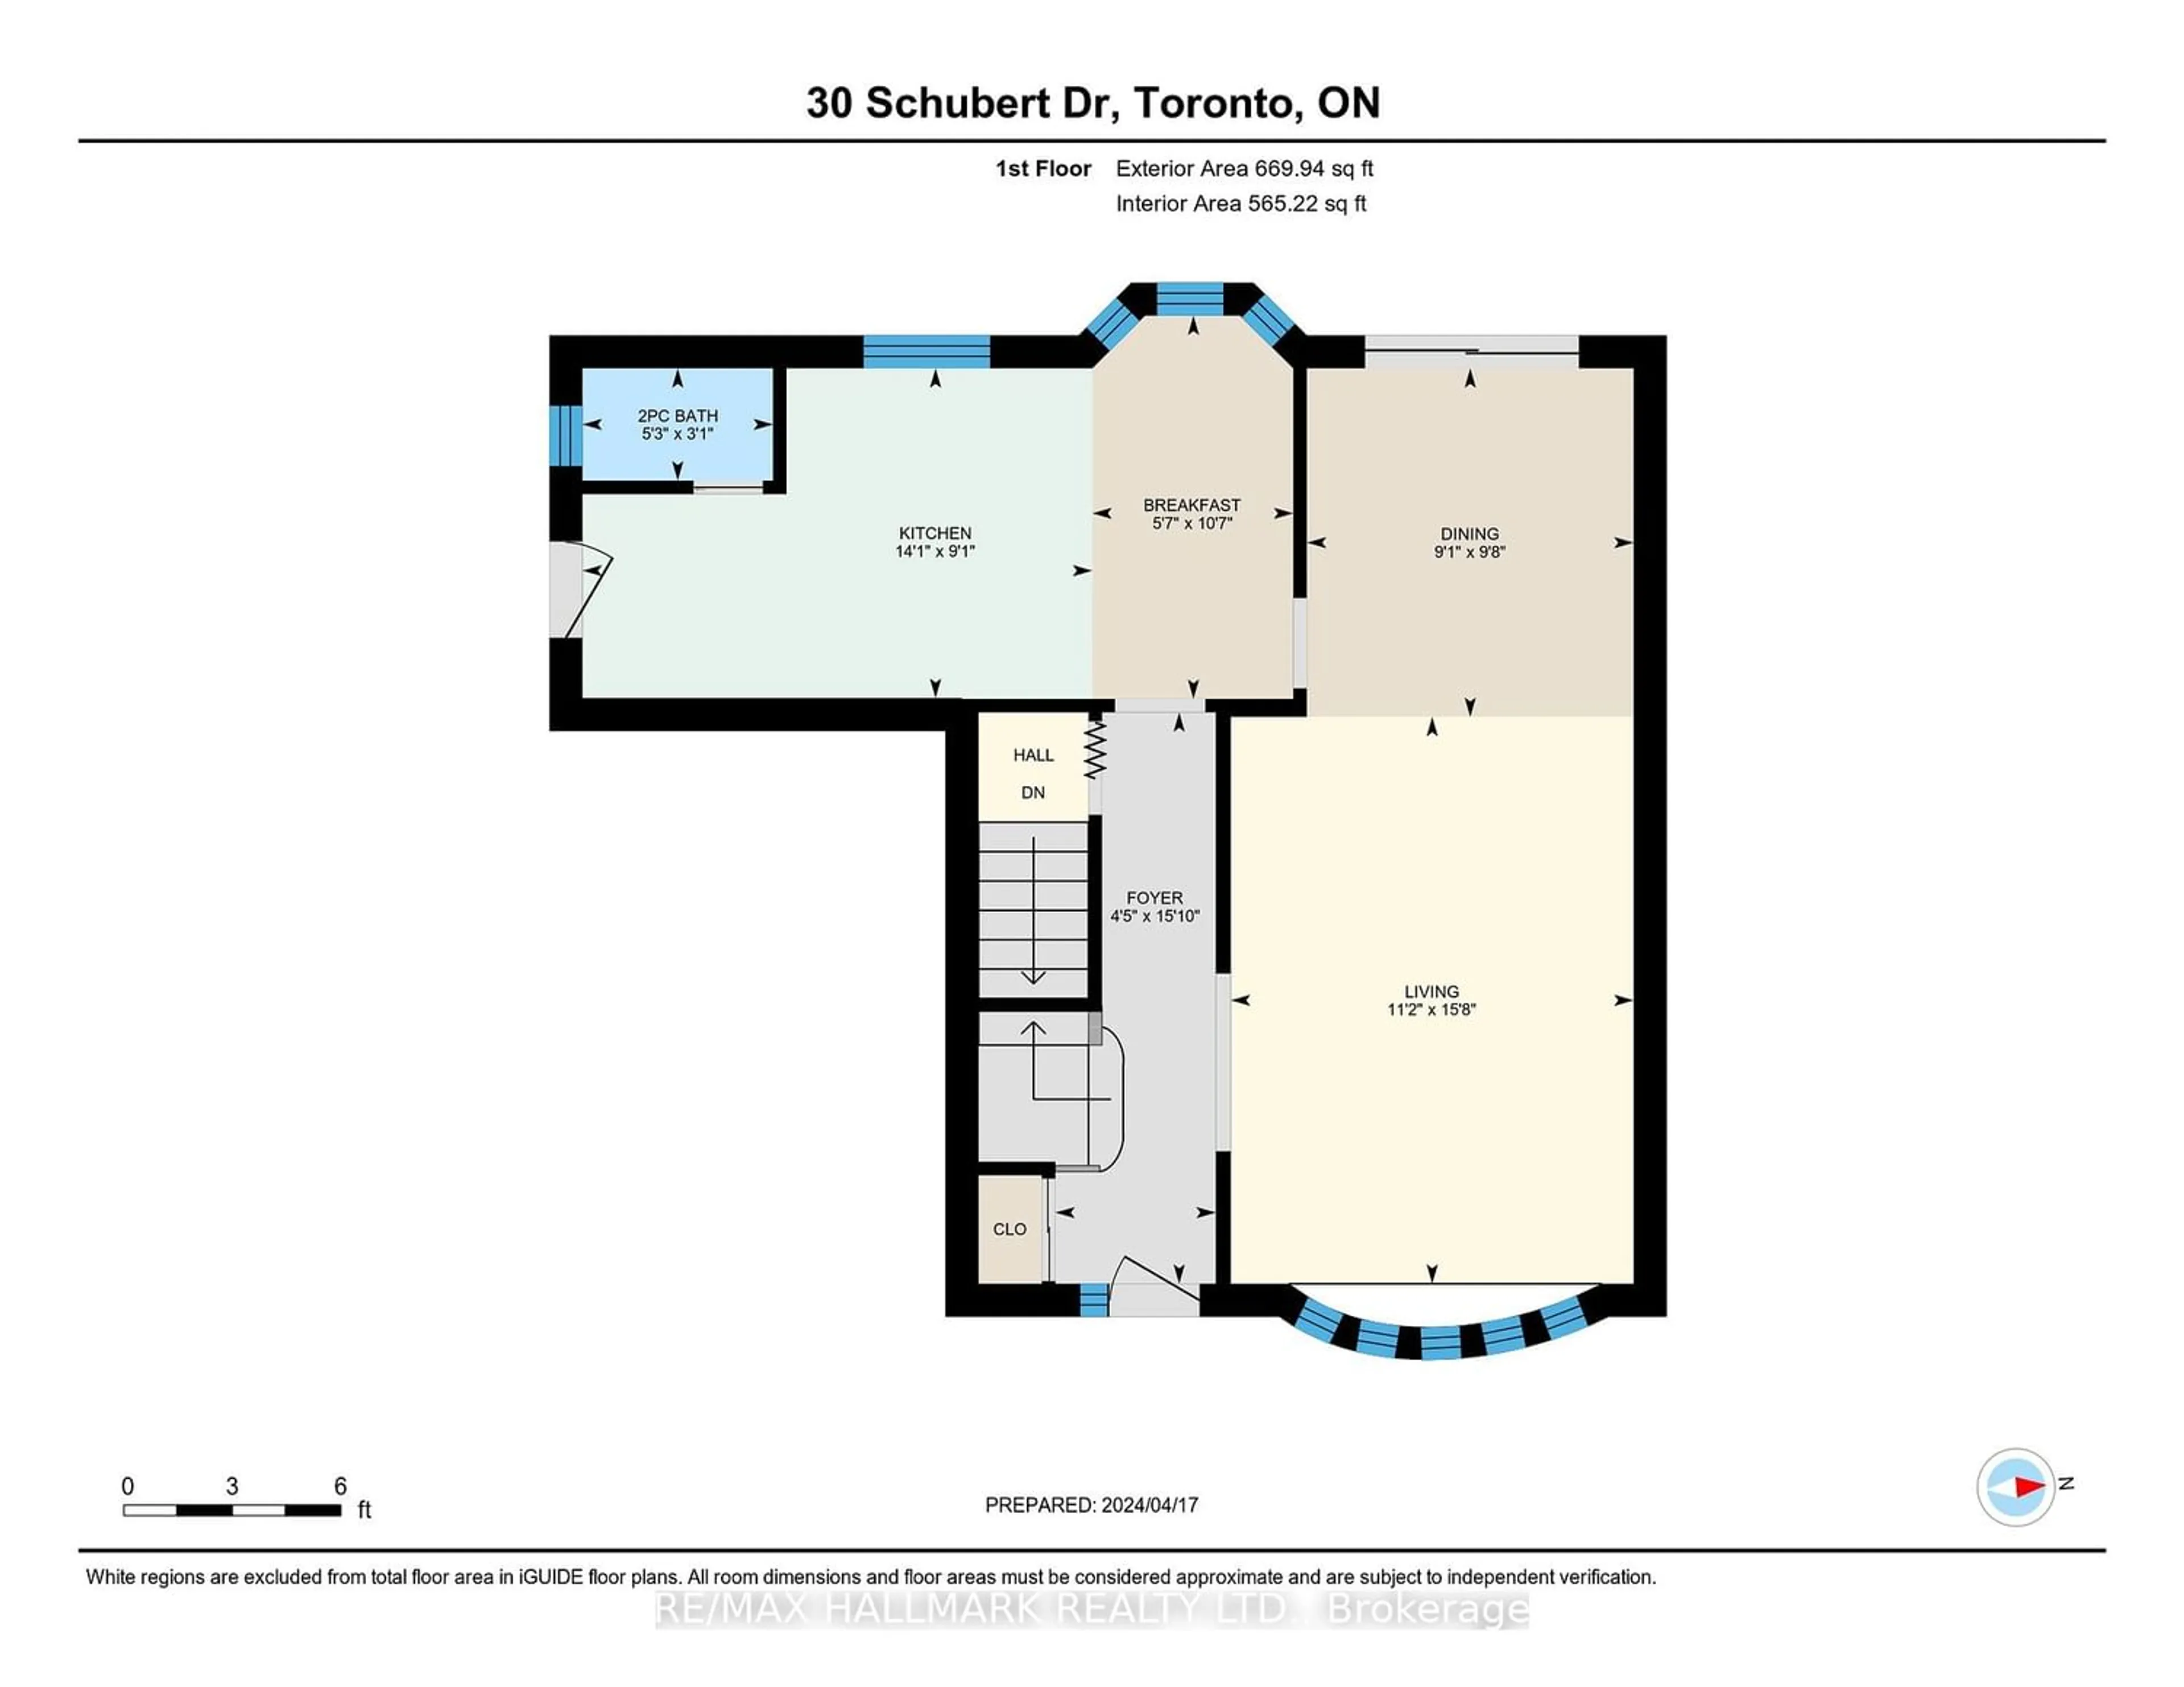 Floor plan for 30 Schubert Dr, Toronto Ontario M1E 1Y7